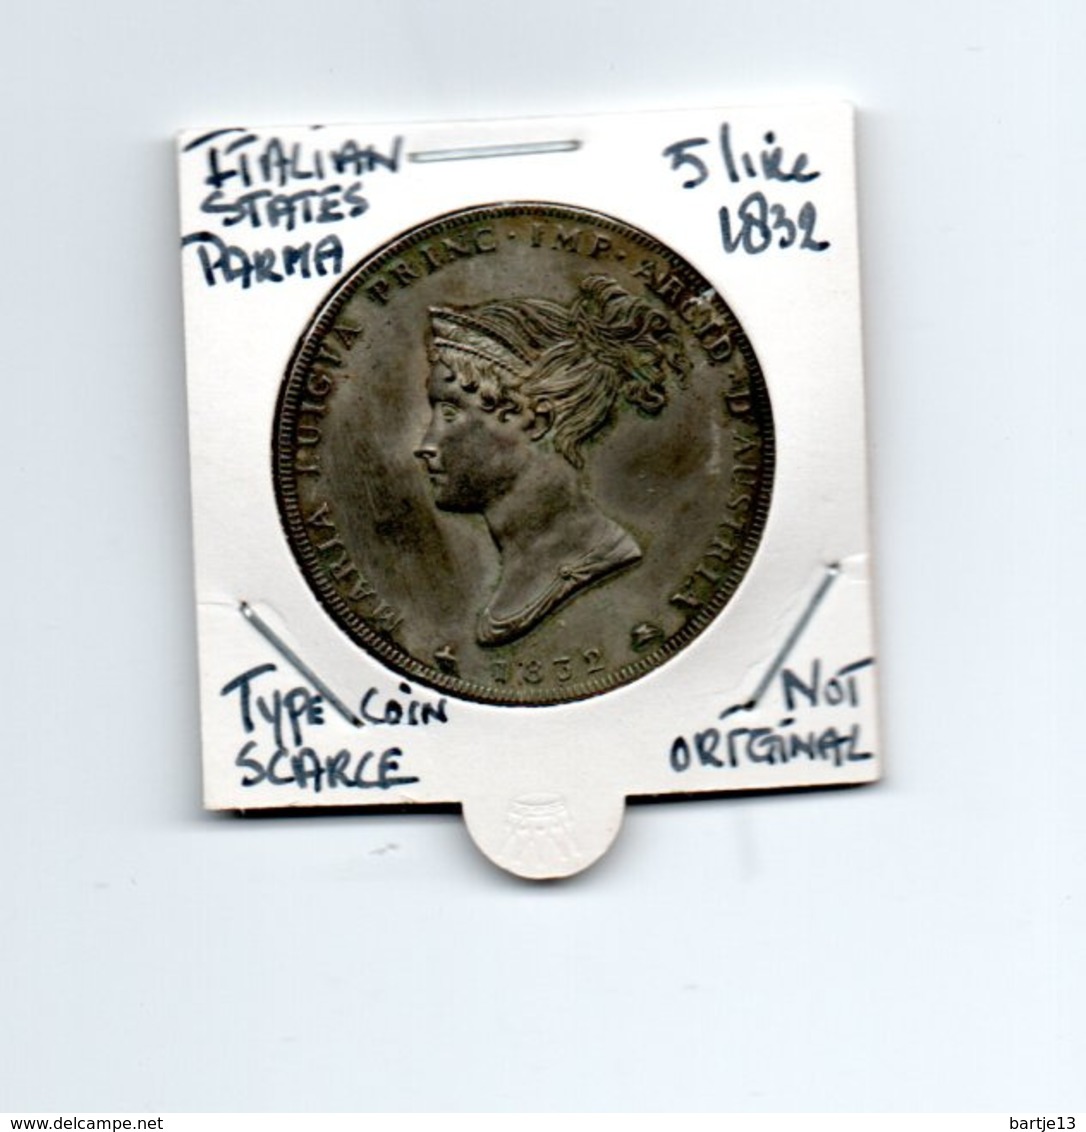 ITALIAN STATES PARMA 5 LIRE 1832 TYPE COIN SCARCE - NOT ORIGINAL - - Parme